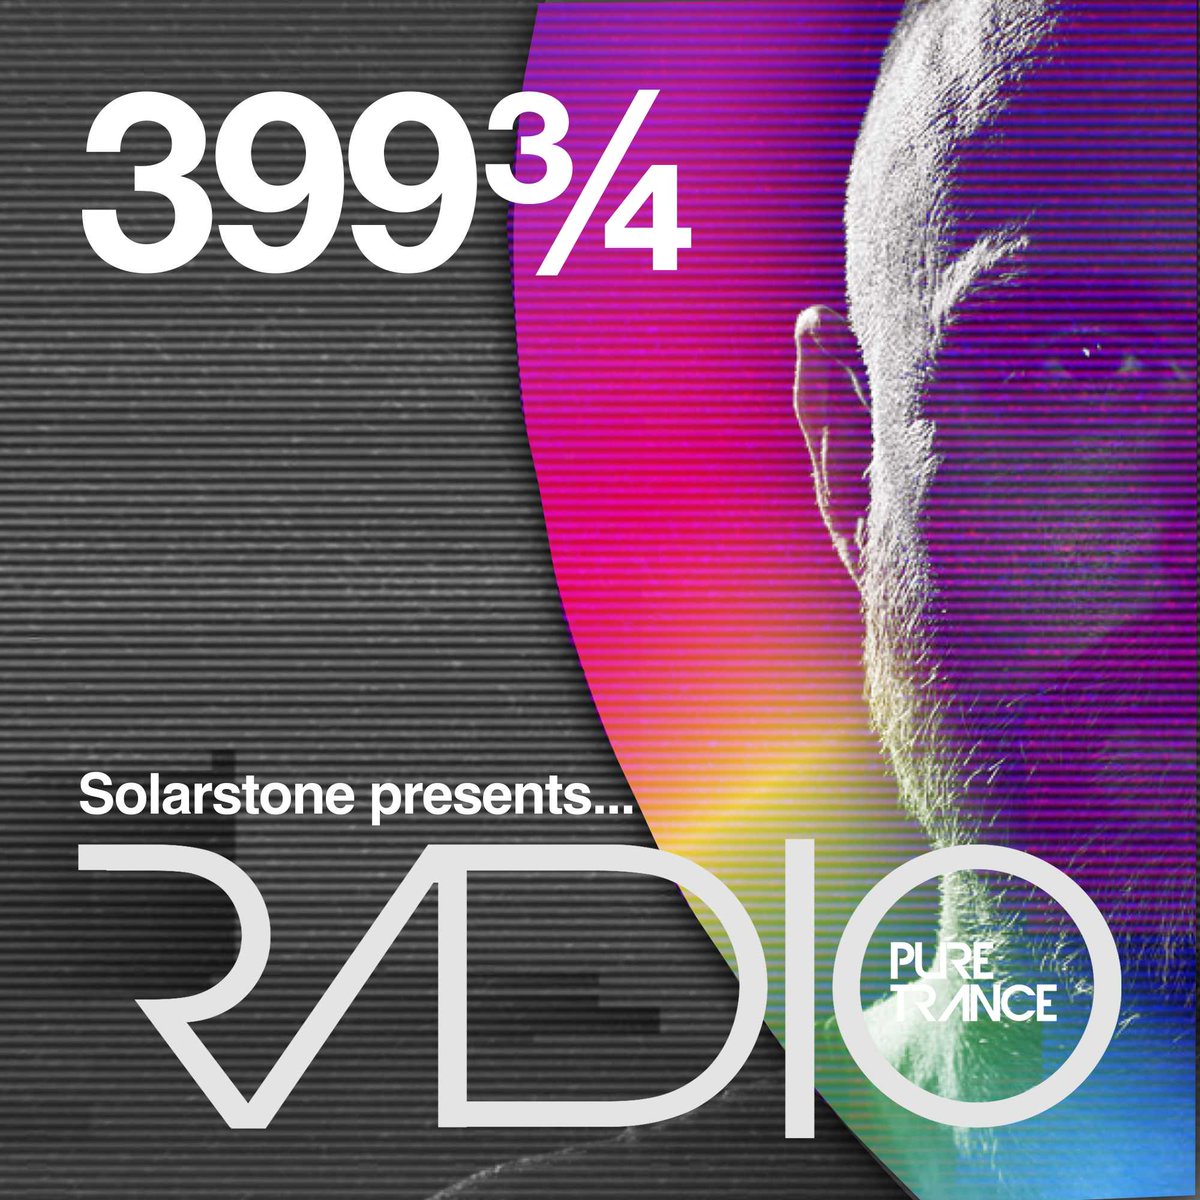 #nowplaying @richsolarstone #puretrance #radioshow #streaming here bit.ly/3ZVGest